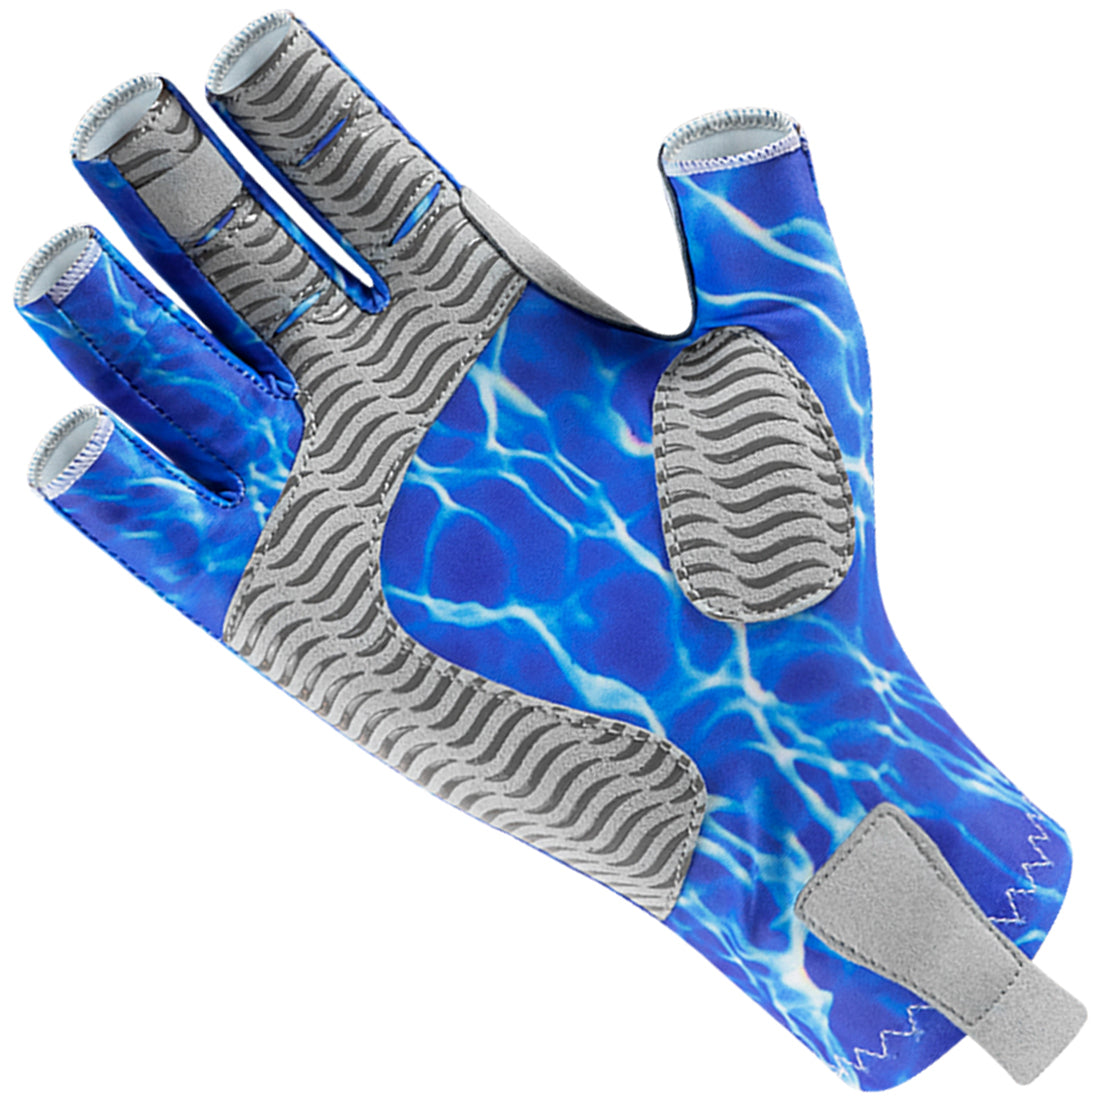 Fishoholic BLUE-s/m Fingerless Fishing Gloves w' Super Grip - UPF50+ S